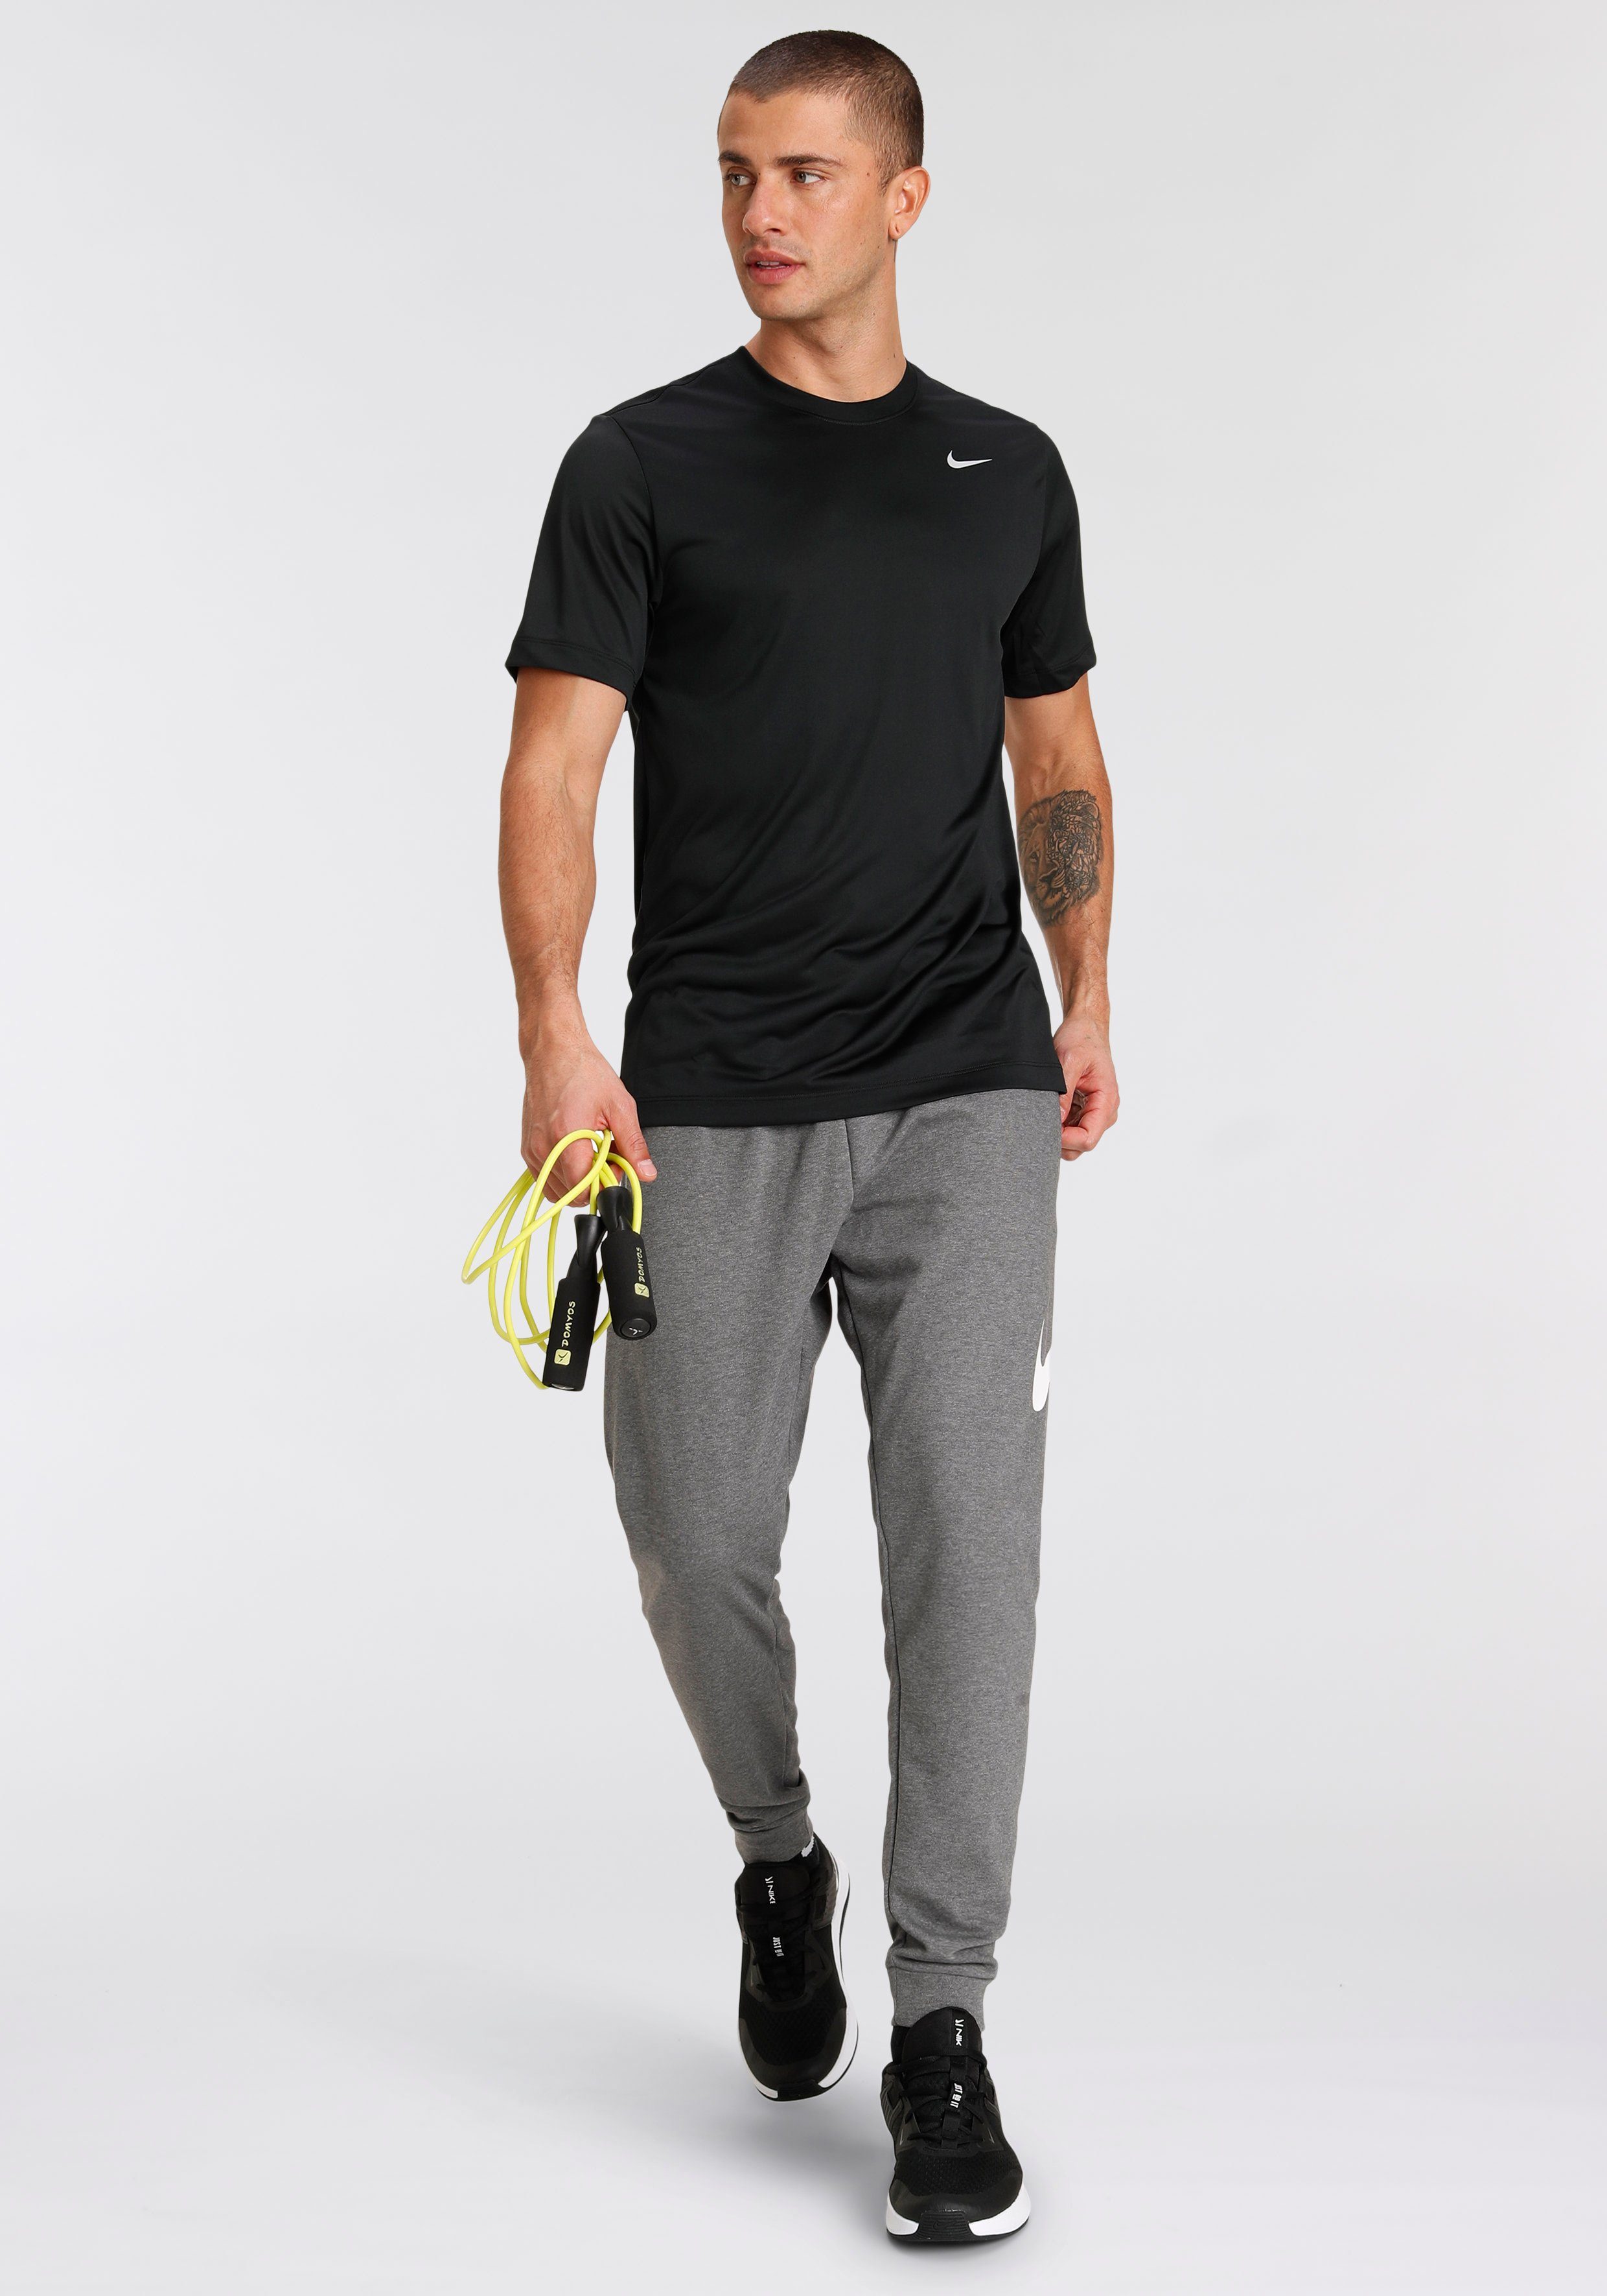 Nike Trainingsshirt DRI-FIT LEGEND MEN'S BLACK/MATTE FITNESS SILVER T-SHIRT